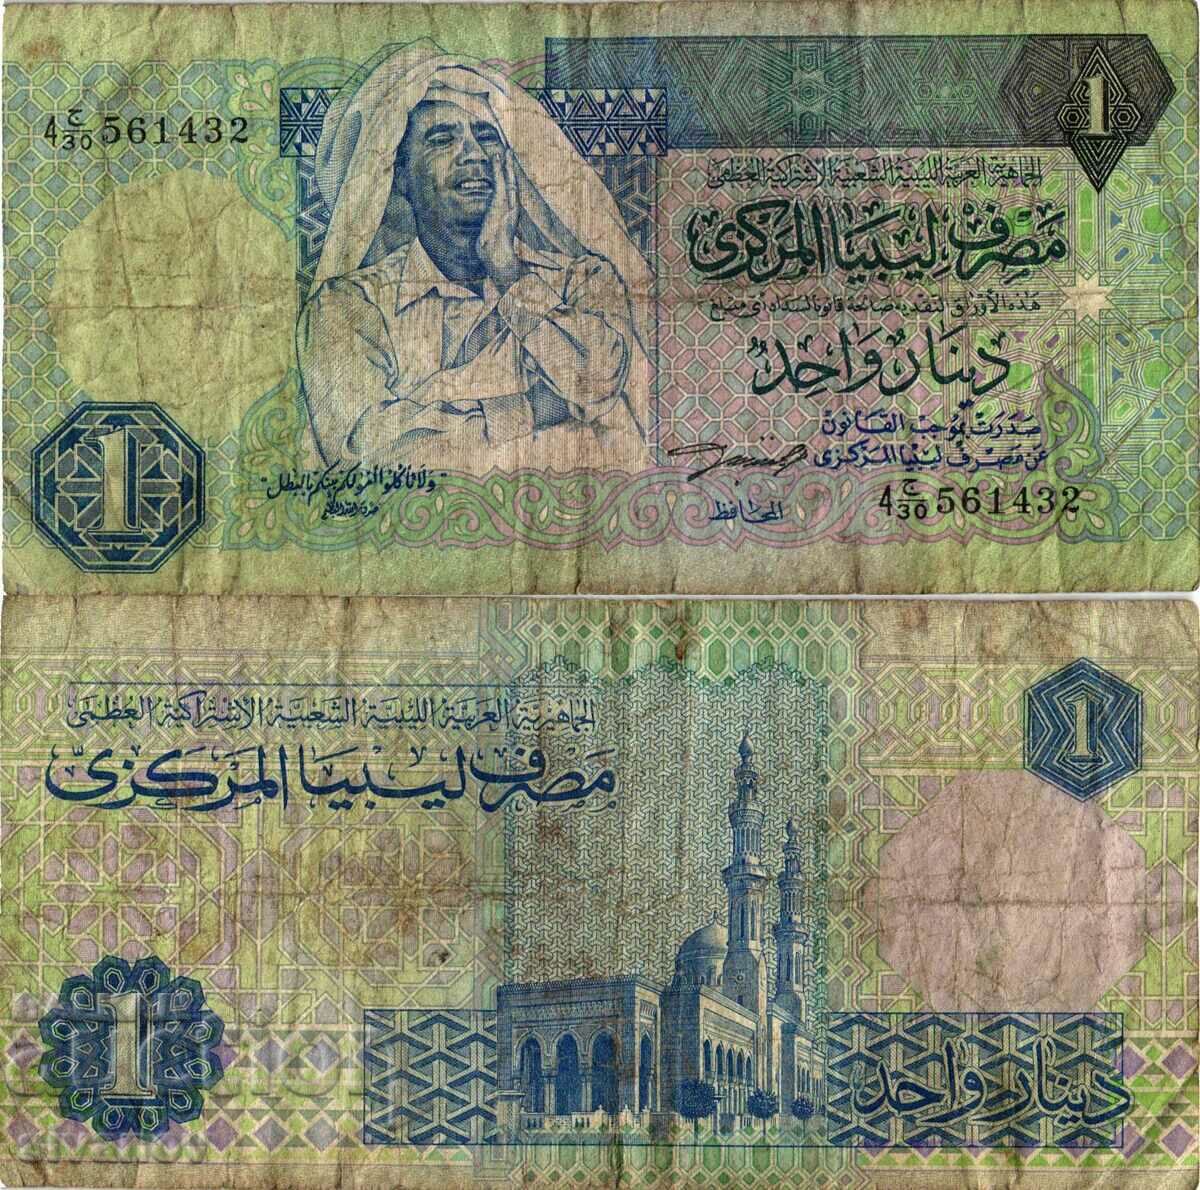 Libya 1 Dinar ND (1991) #4182